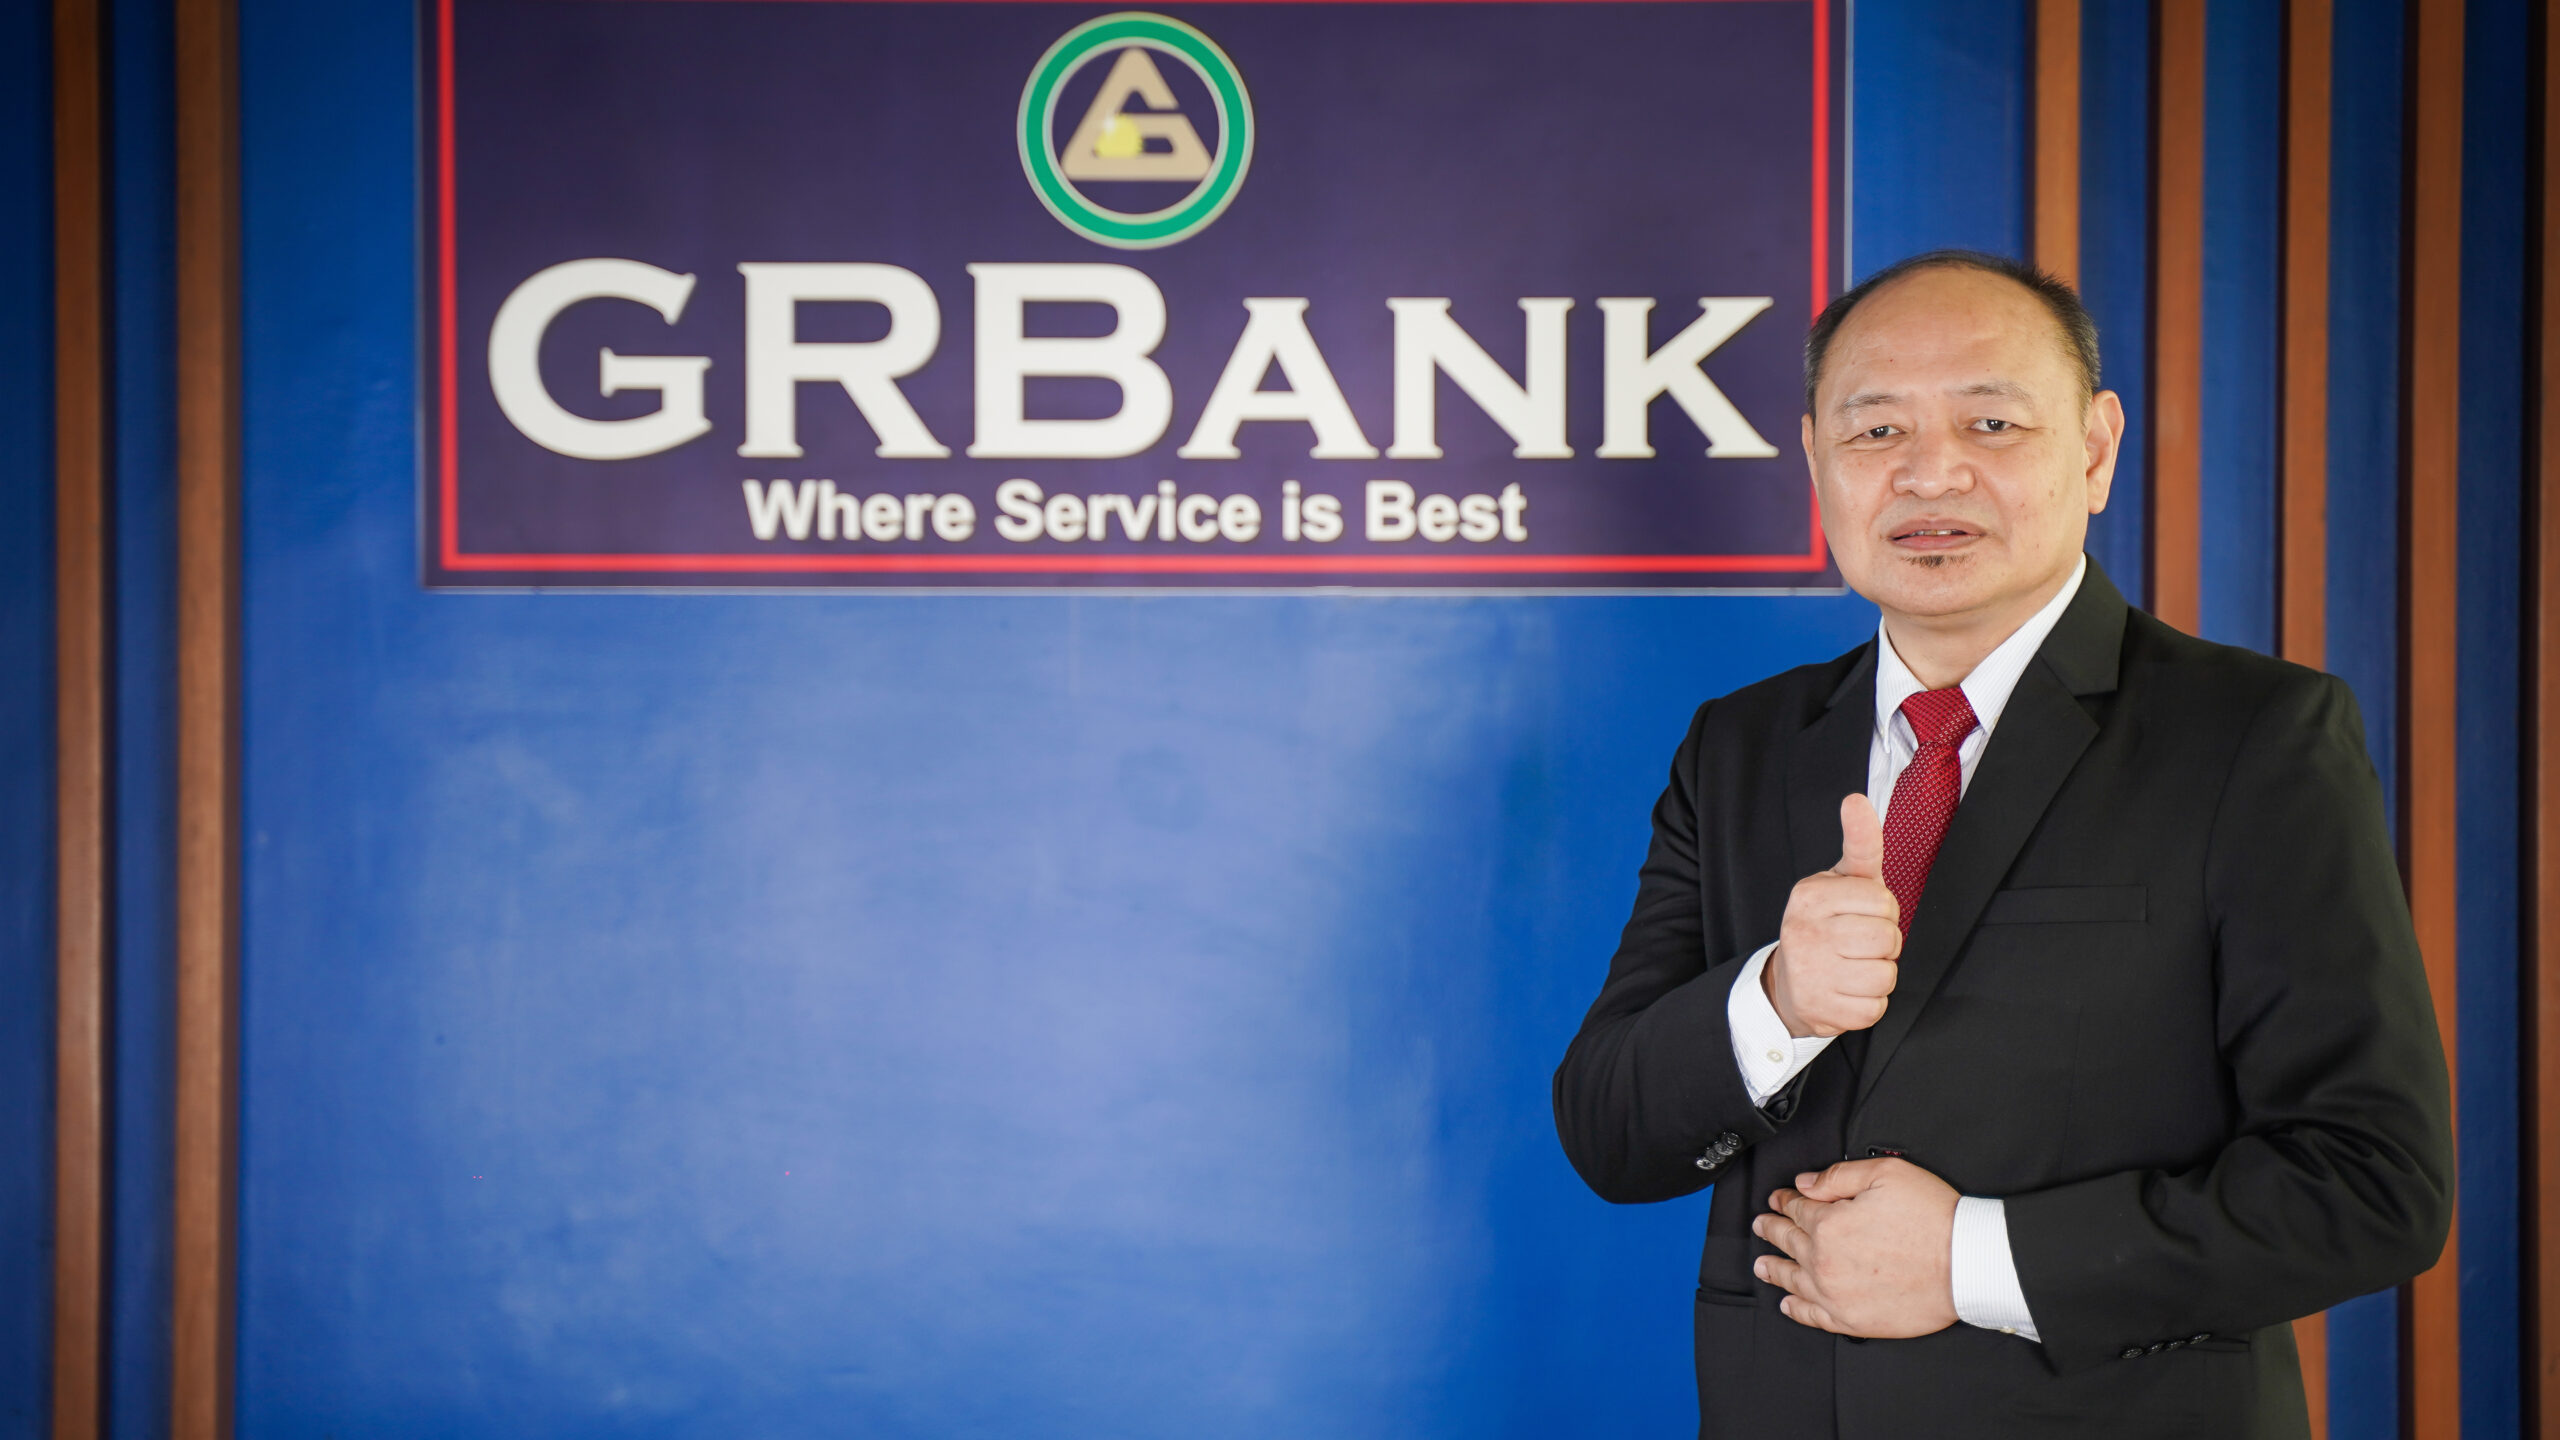 The Man Behind GRBank